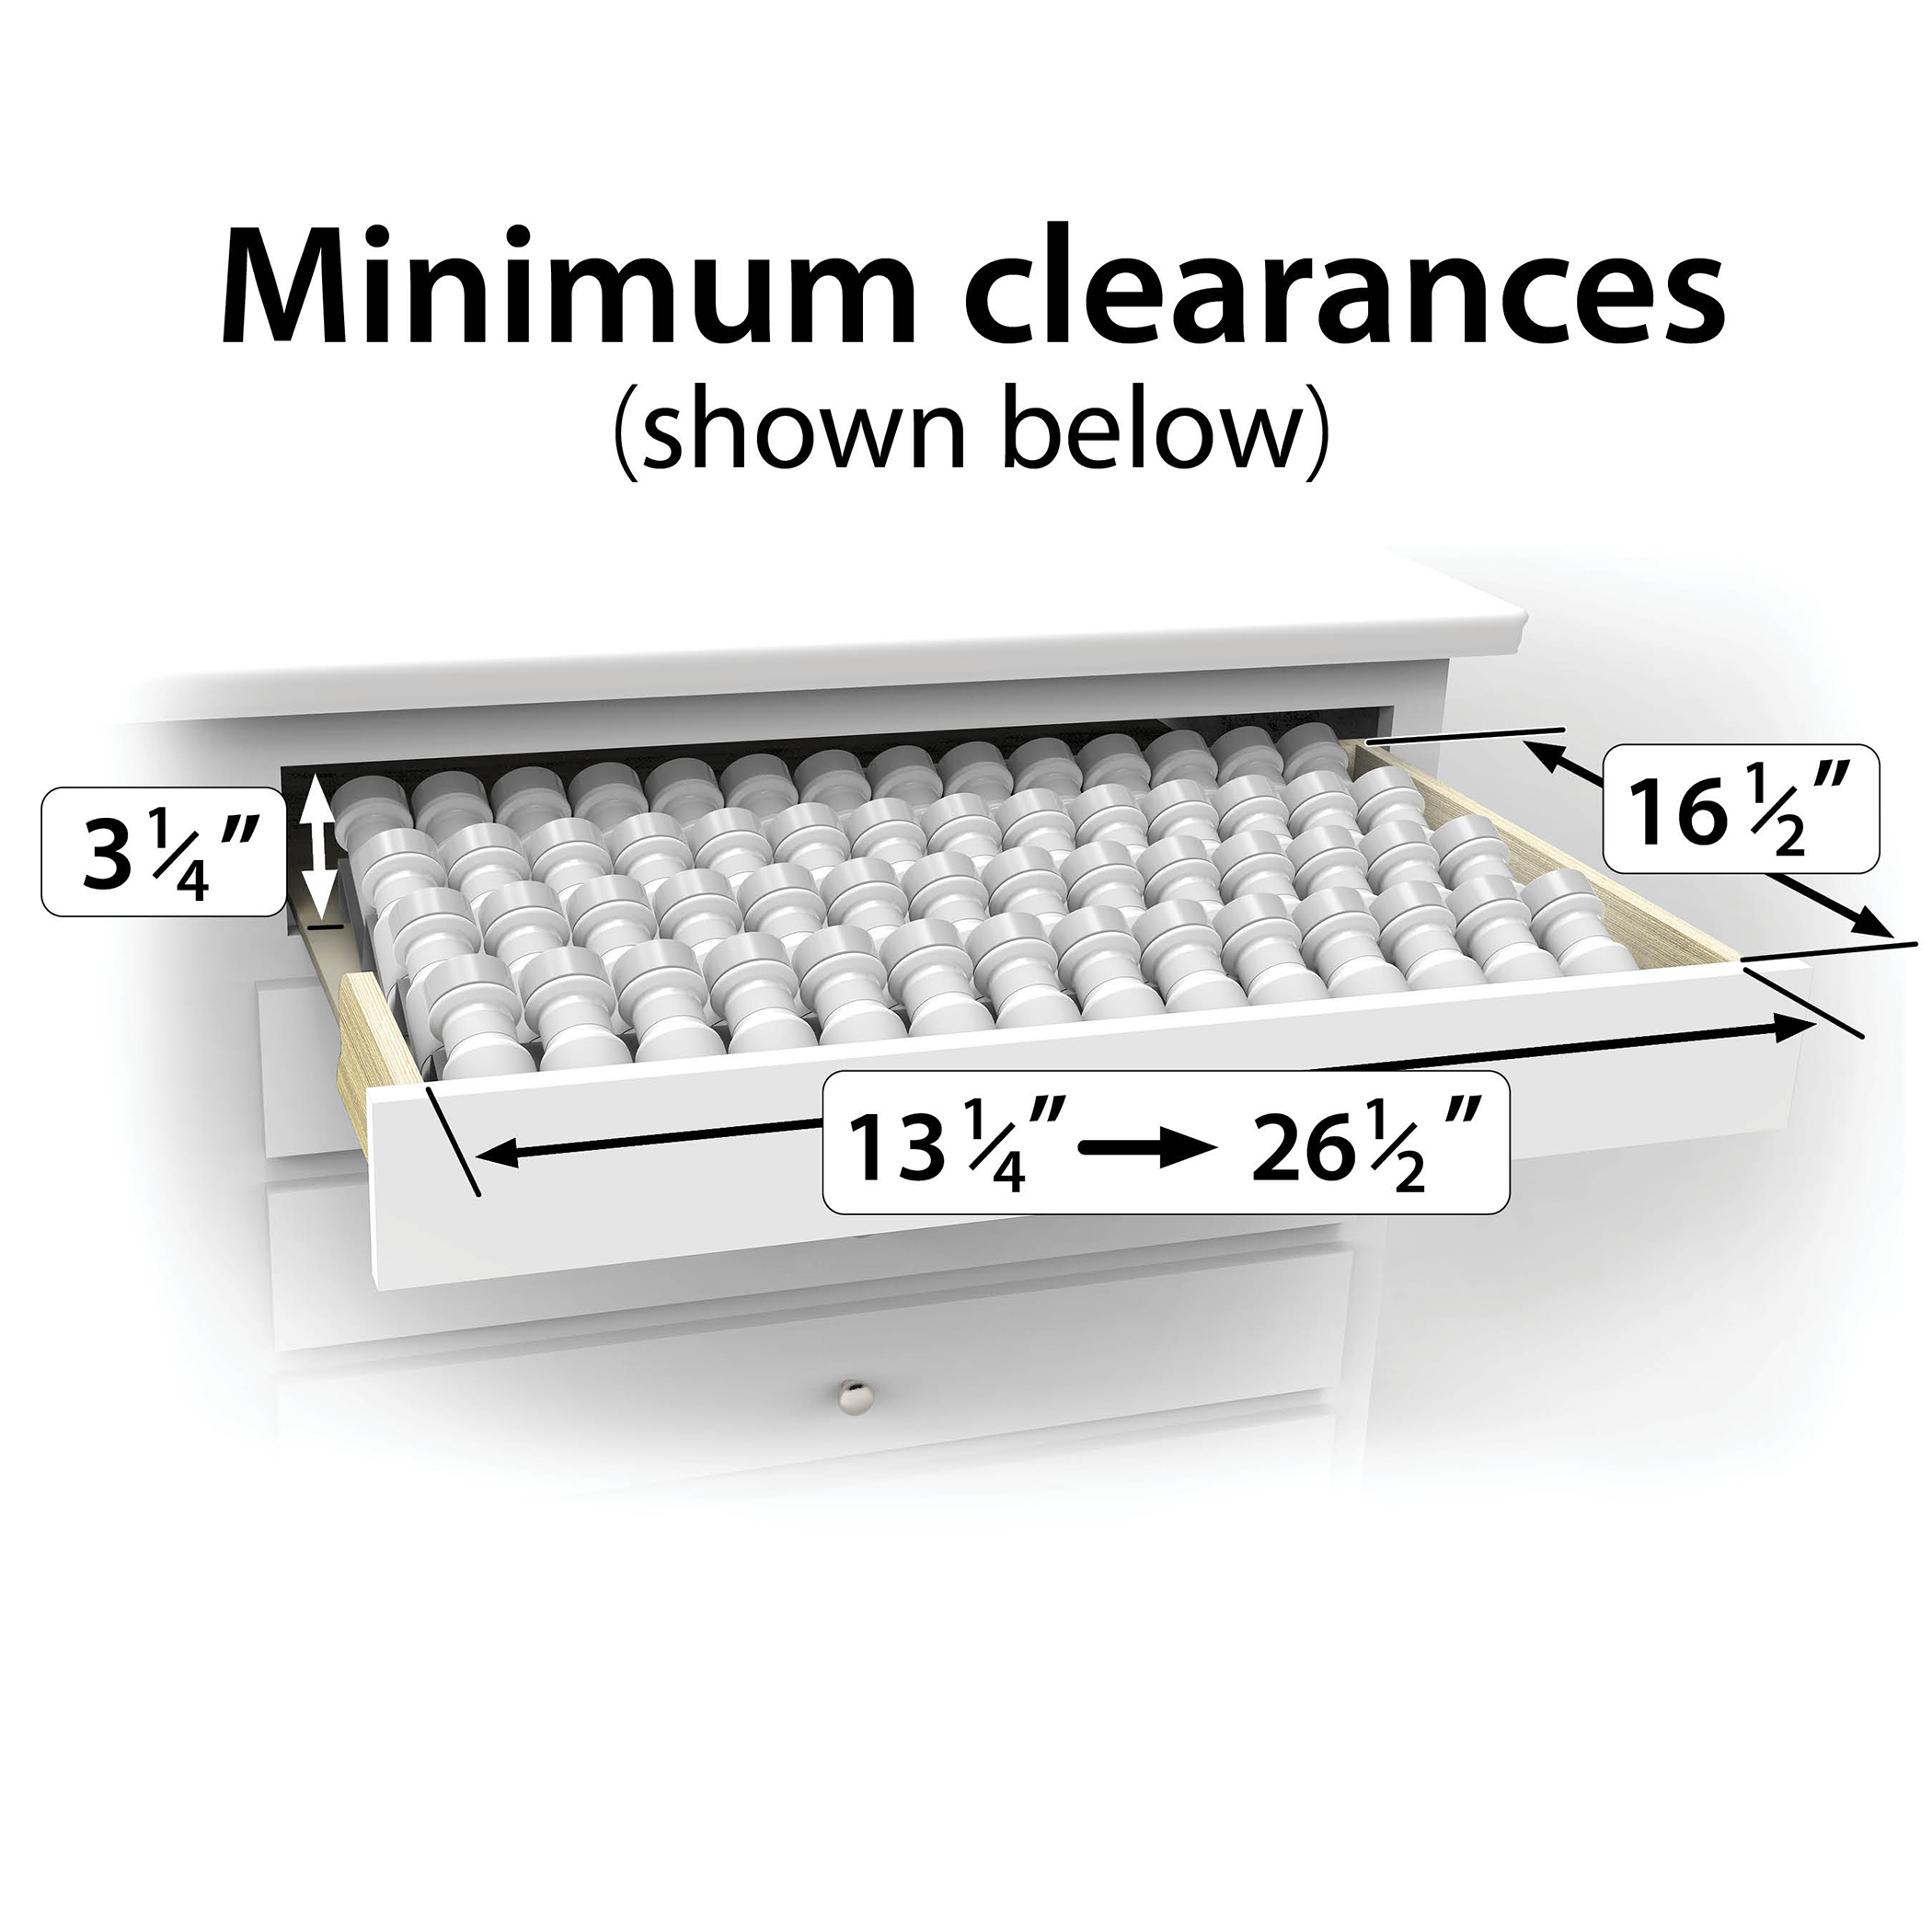 4304142PK Expandable Spice Rack Tray Insert Drawer Organizer - Lynk Inc